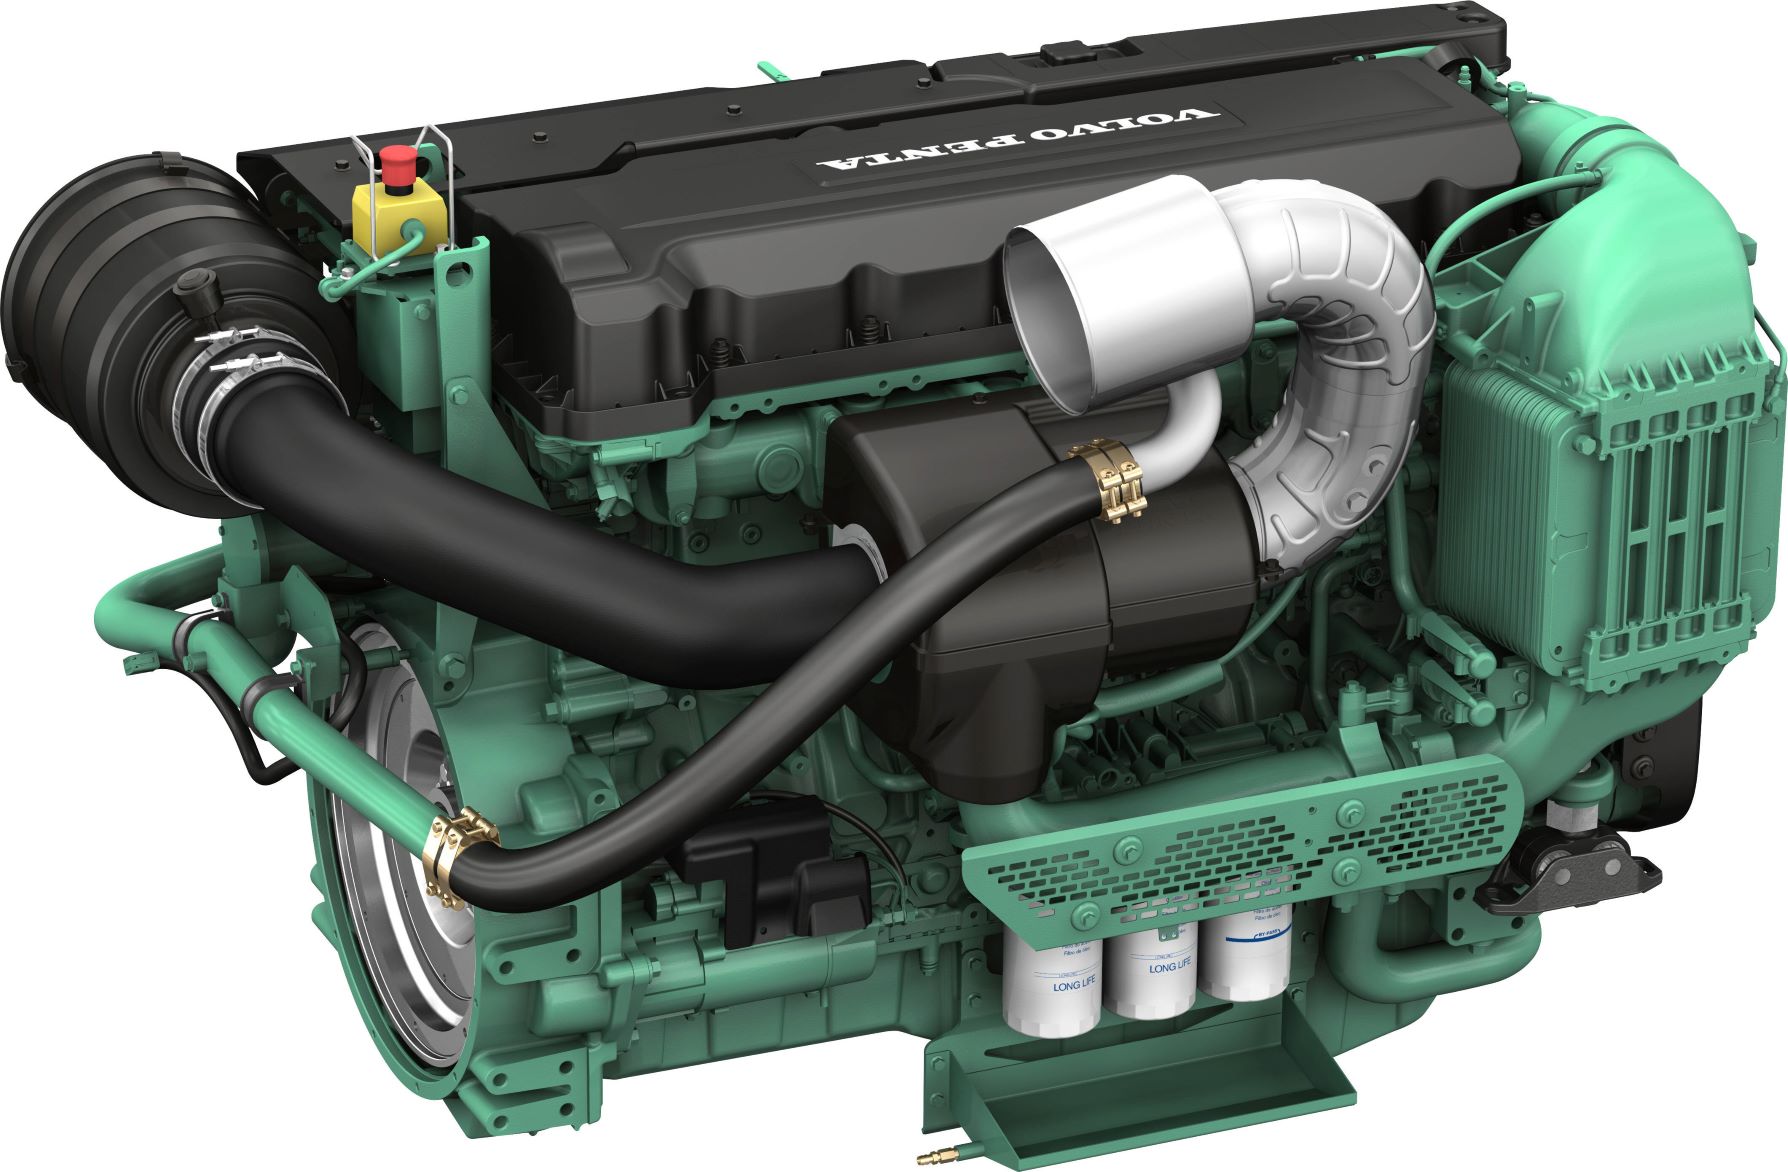 Marine Diesel Engine Upgrade For Extra Range